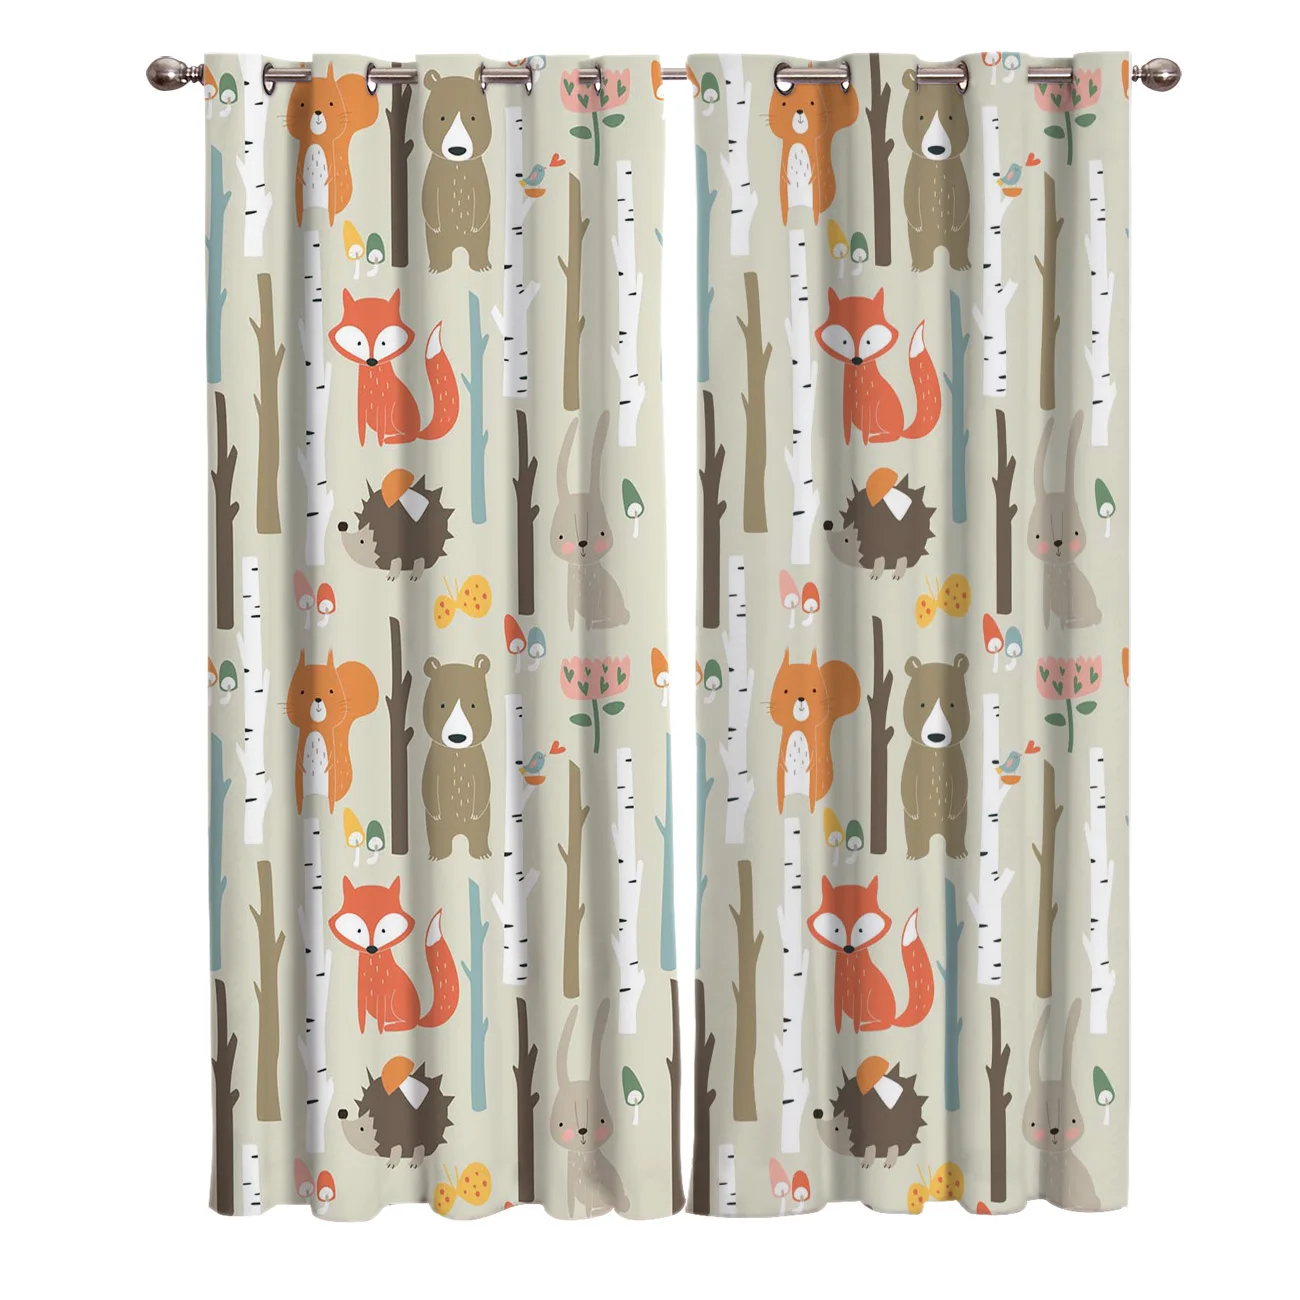 Details about   Cartoon Animal Kids Fox Bear Cat Bird Window Living Room Bedroom Curtains Drapes 